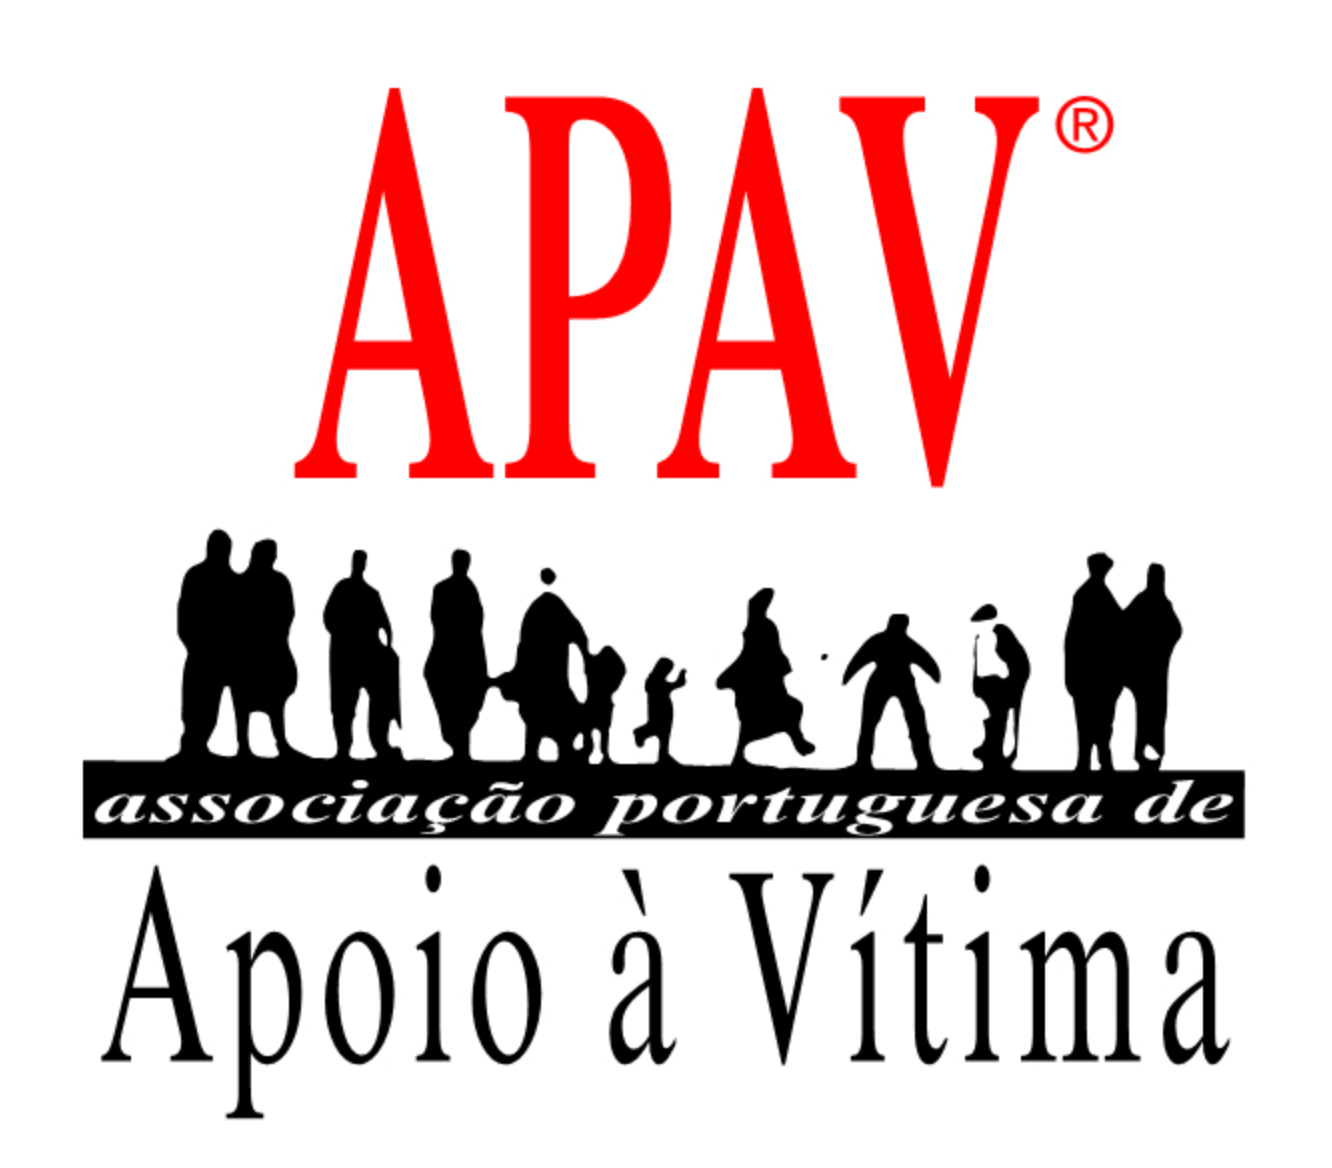 apav logo philosophy for children and youth